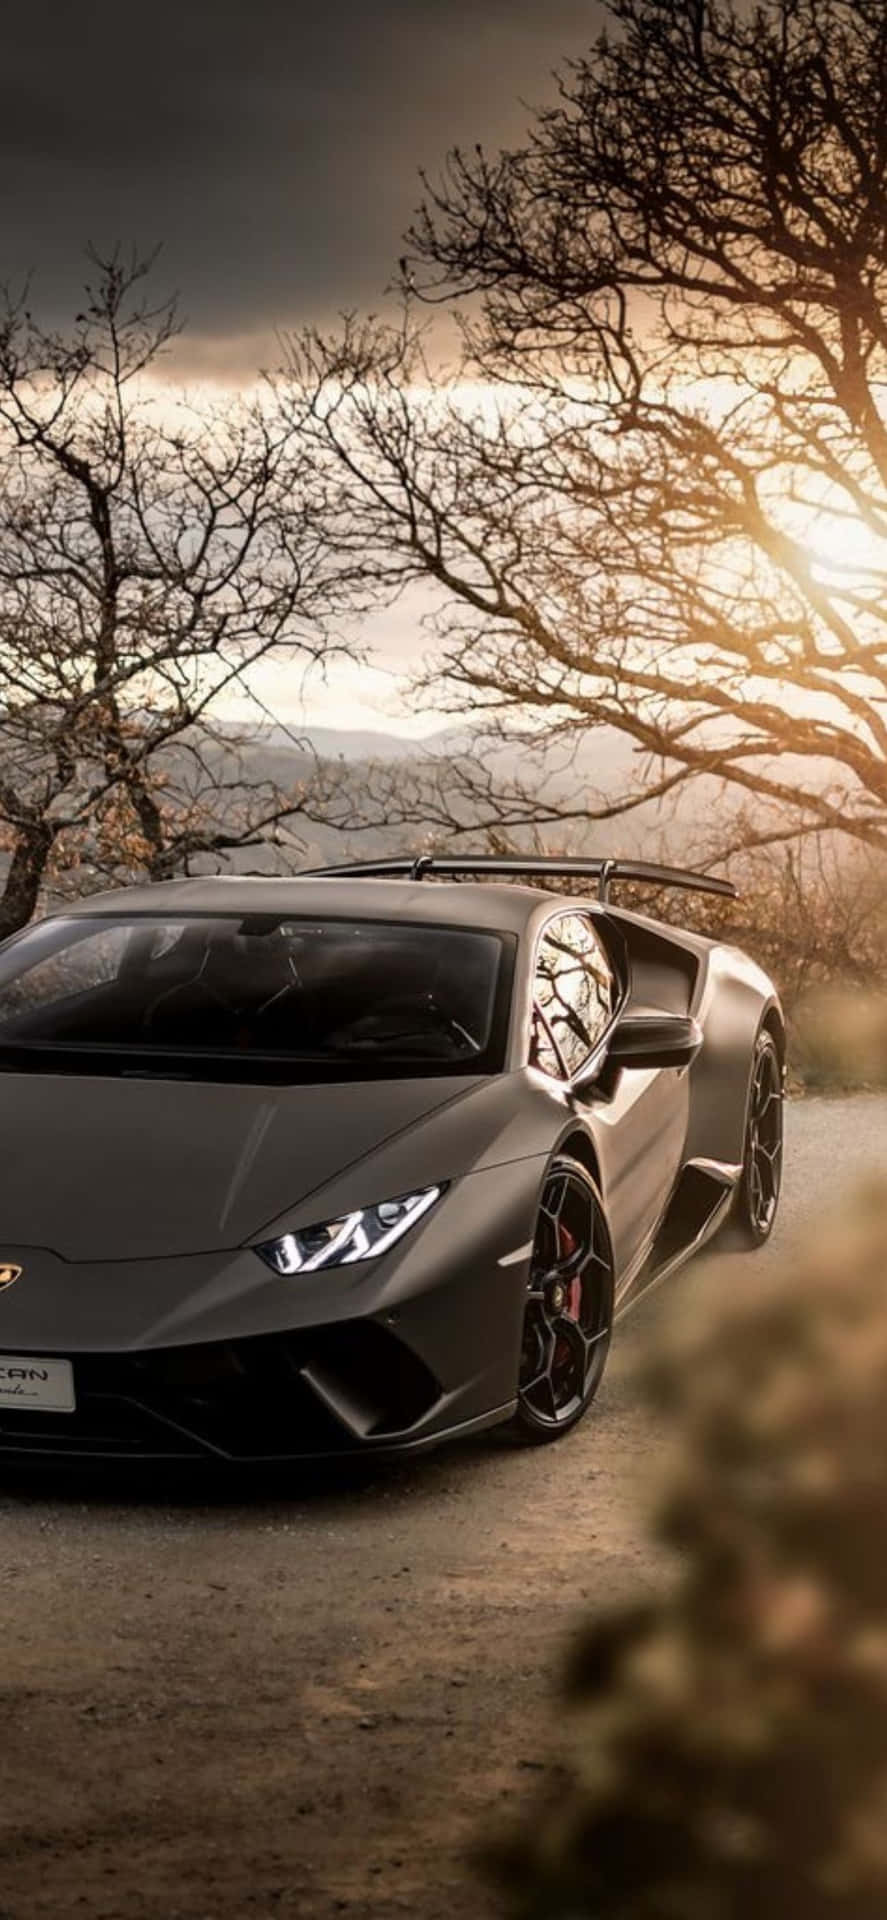 iPhone XS Max Lamborghini Gray Huracan Background